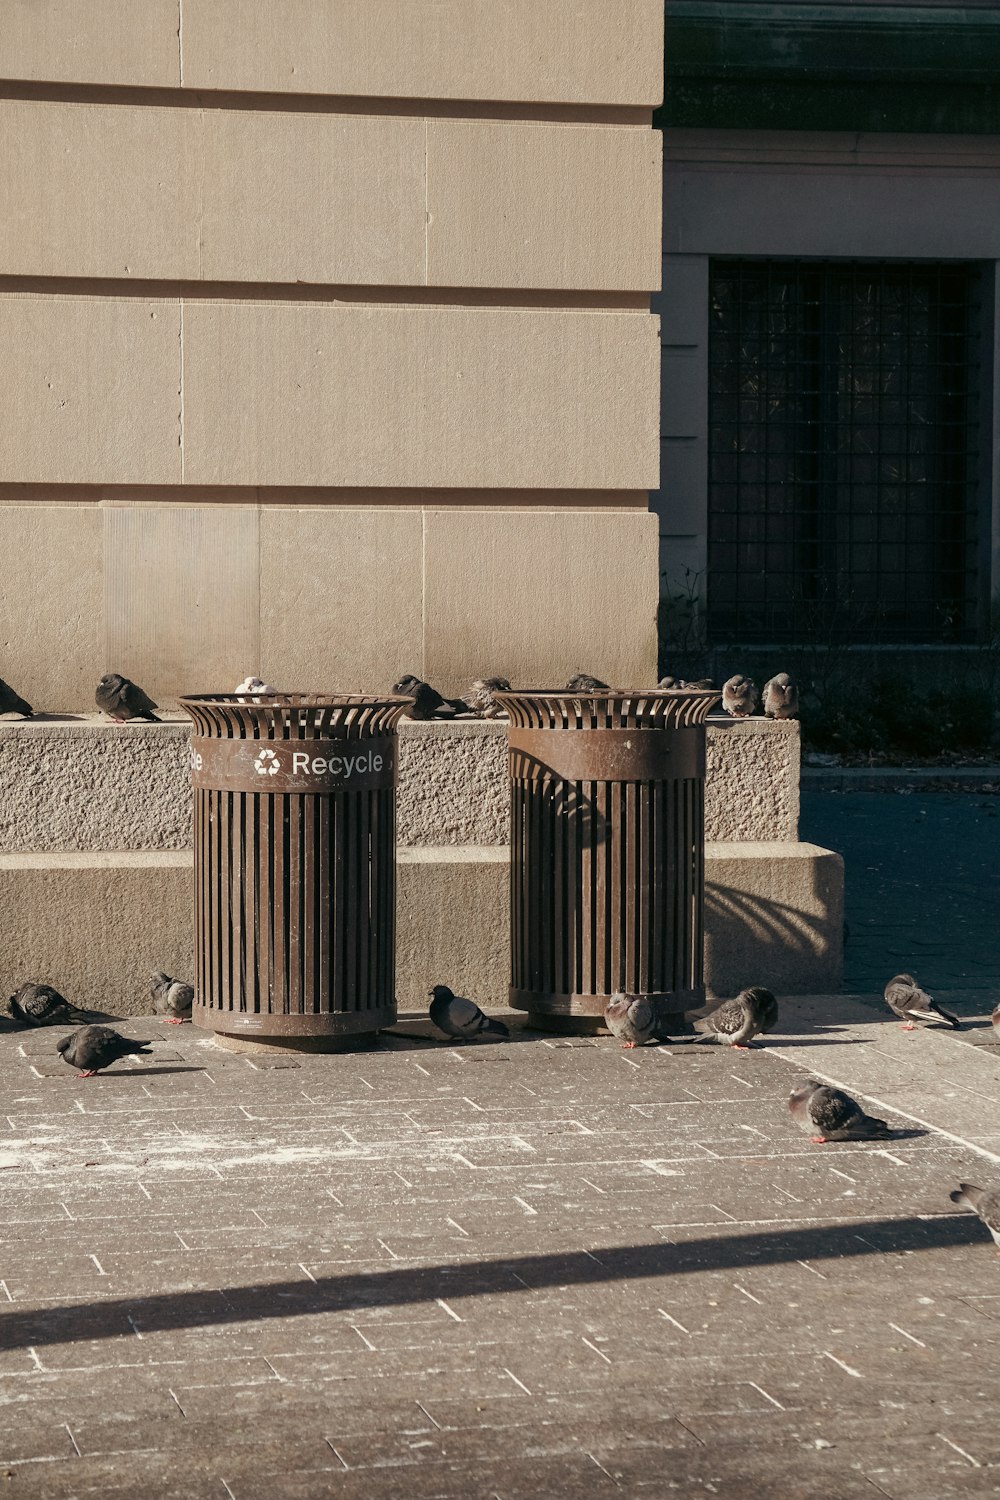 Un grupo de pájaros sentados encima de botes de basura